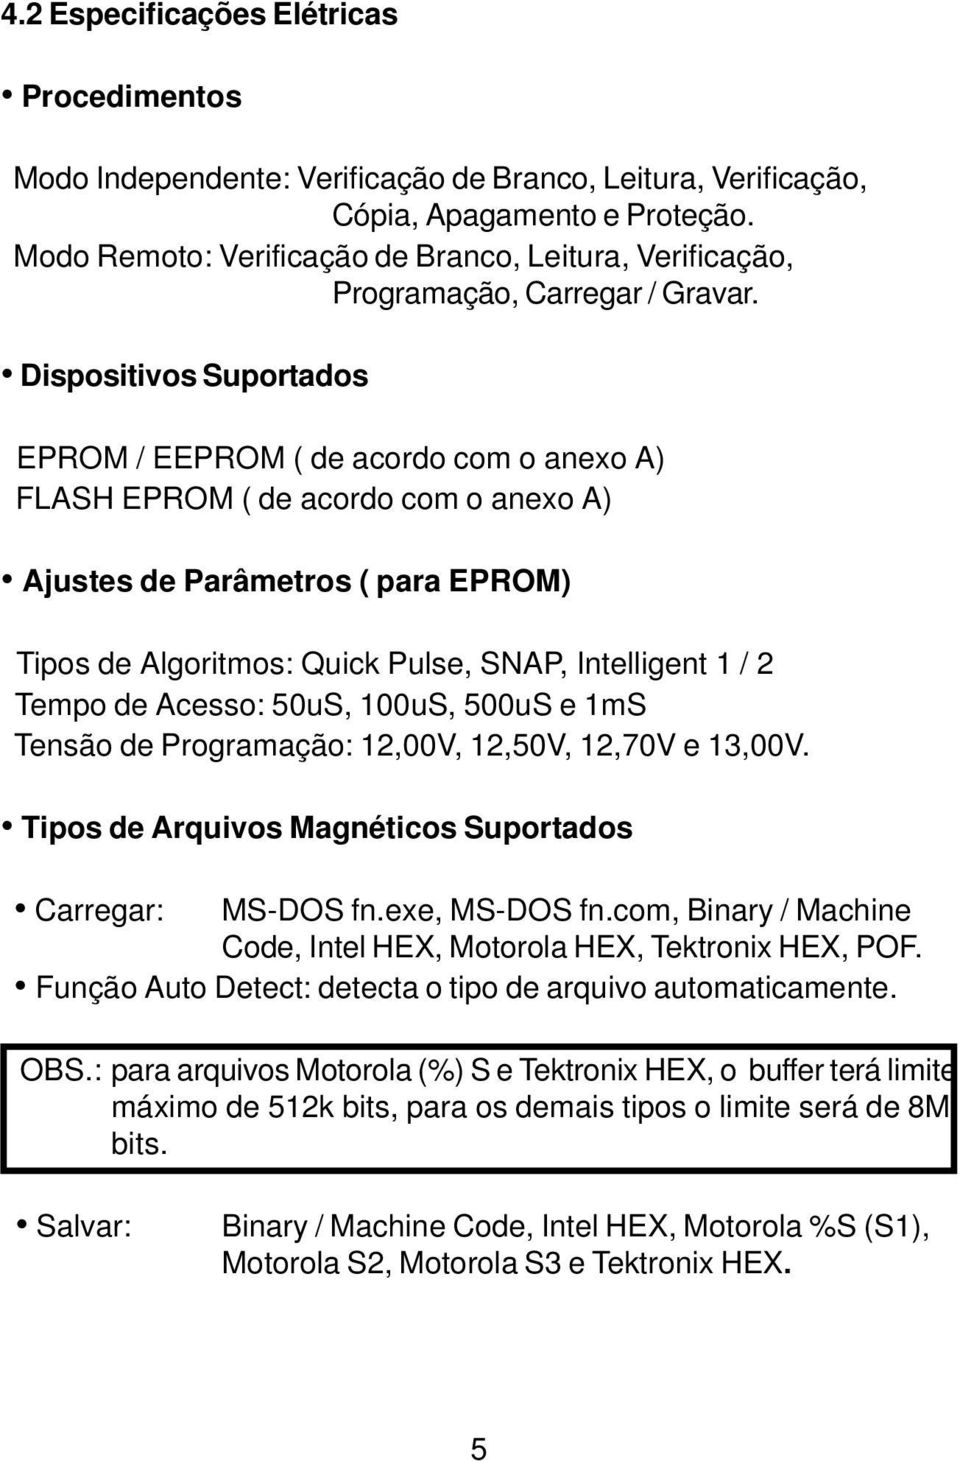 Dispositivos Suportados EPROM / EEPROM ( de acordo com o anexo A) FLASH EPROM ( de acordo com o anexo A) Ajustes de Parâmetros ( para EPROM) Tipos de Algoritmos: Quick Pulse, SNAP, Intelligent 1 / 2